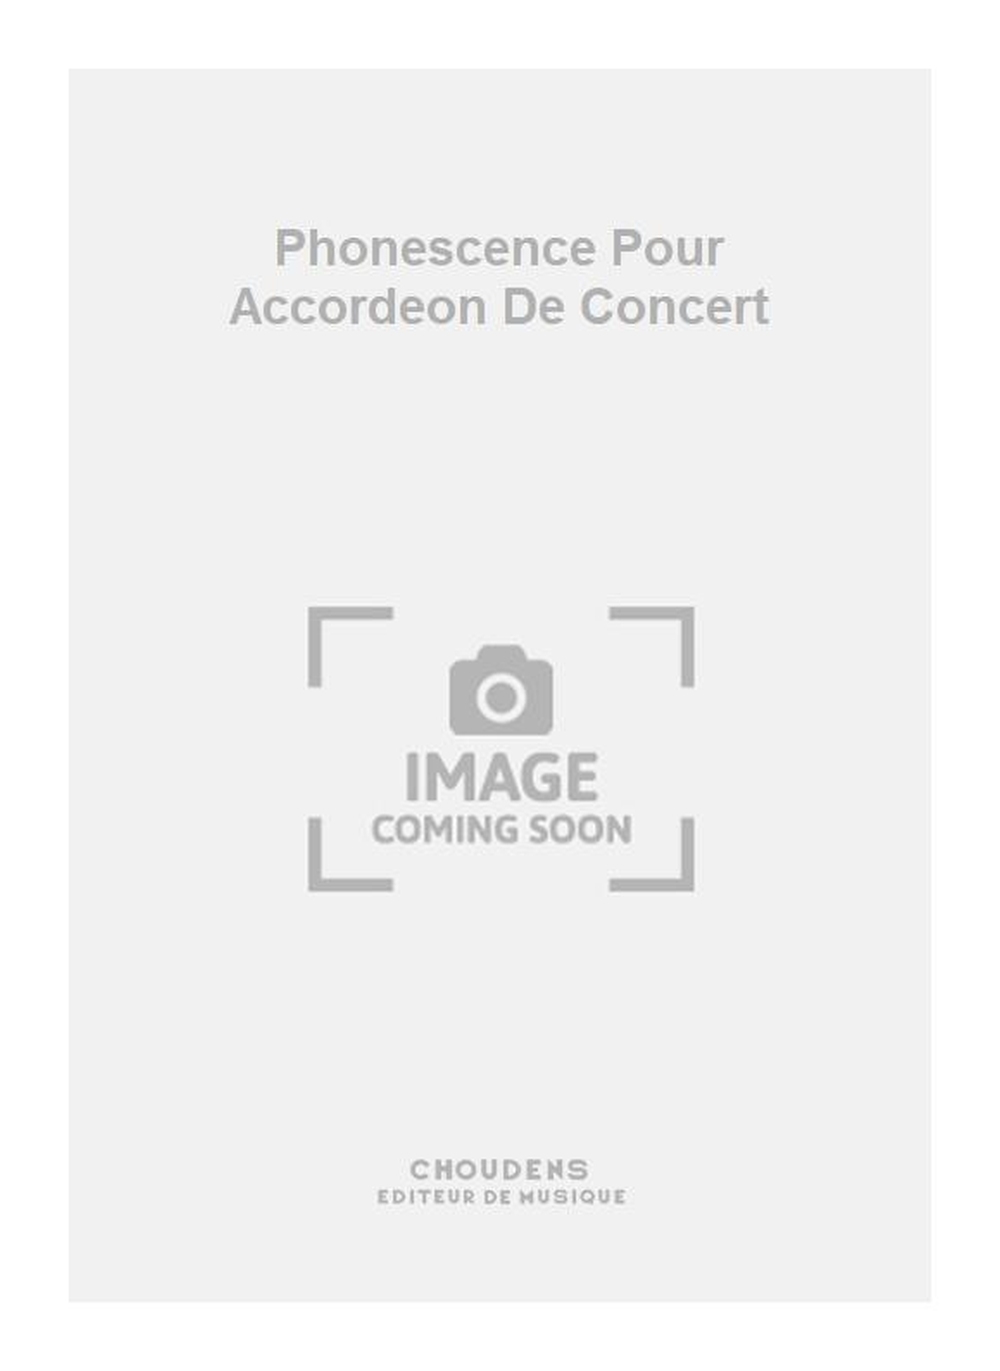 Sciortino: Phonescence Pour Accordeon De Concert